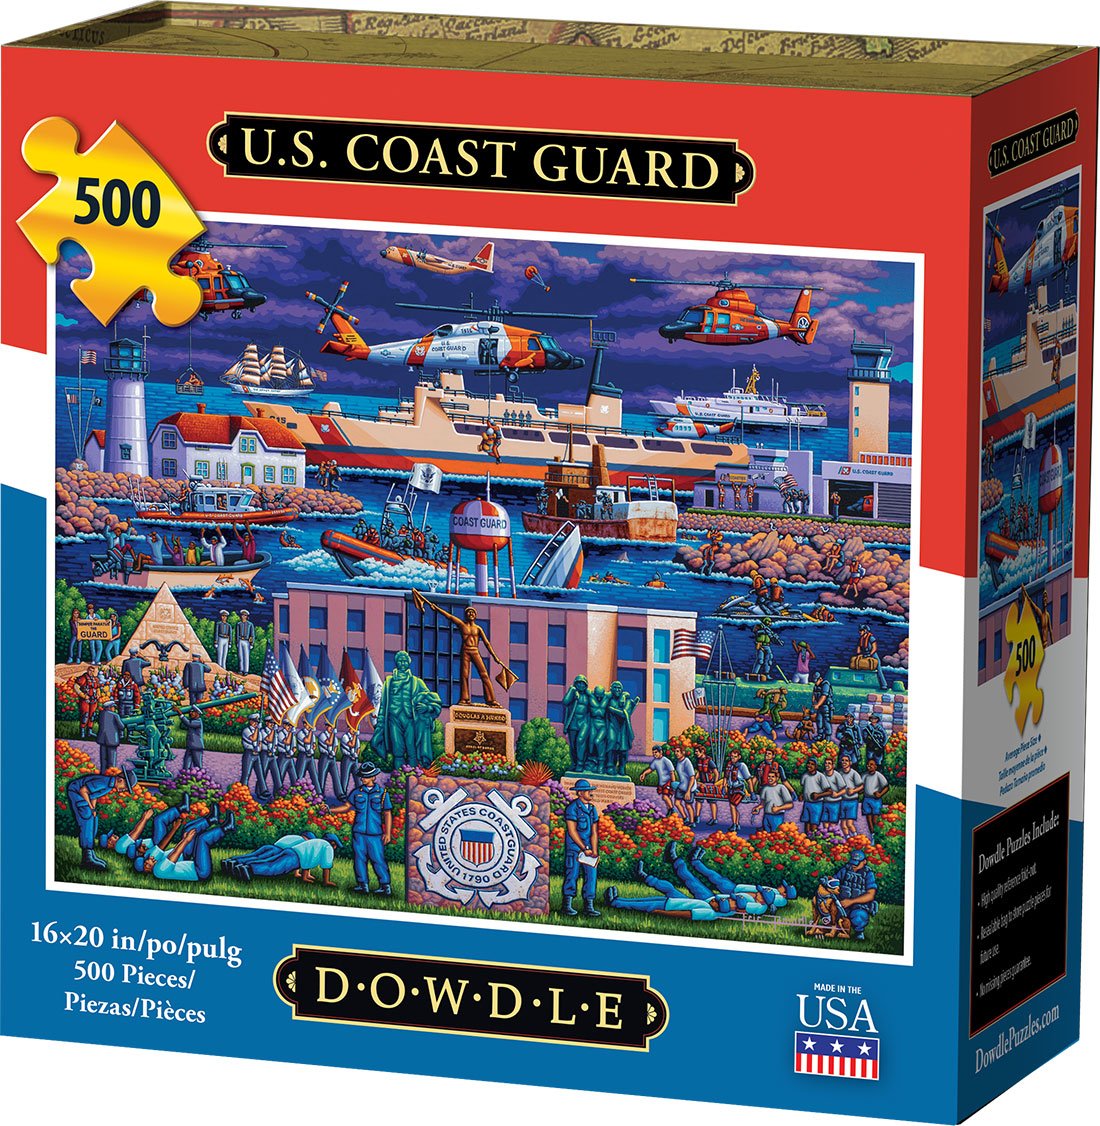 U.S. Coast Guard (500 pc puzzle)